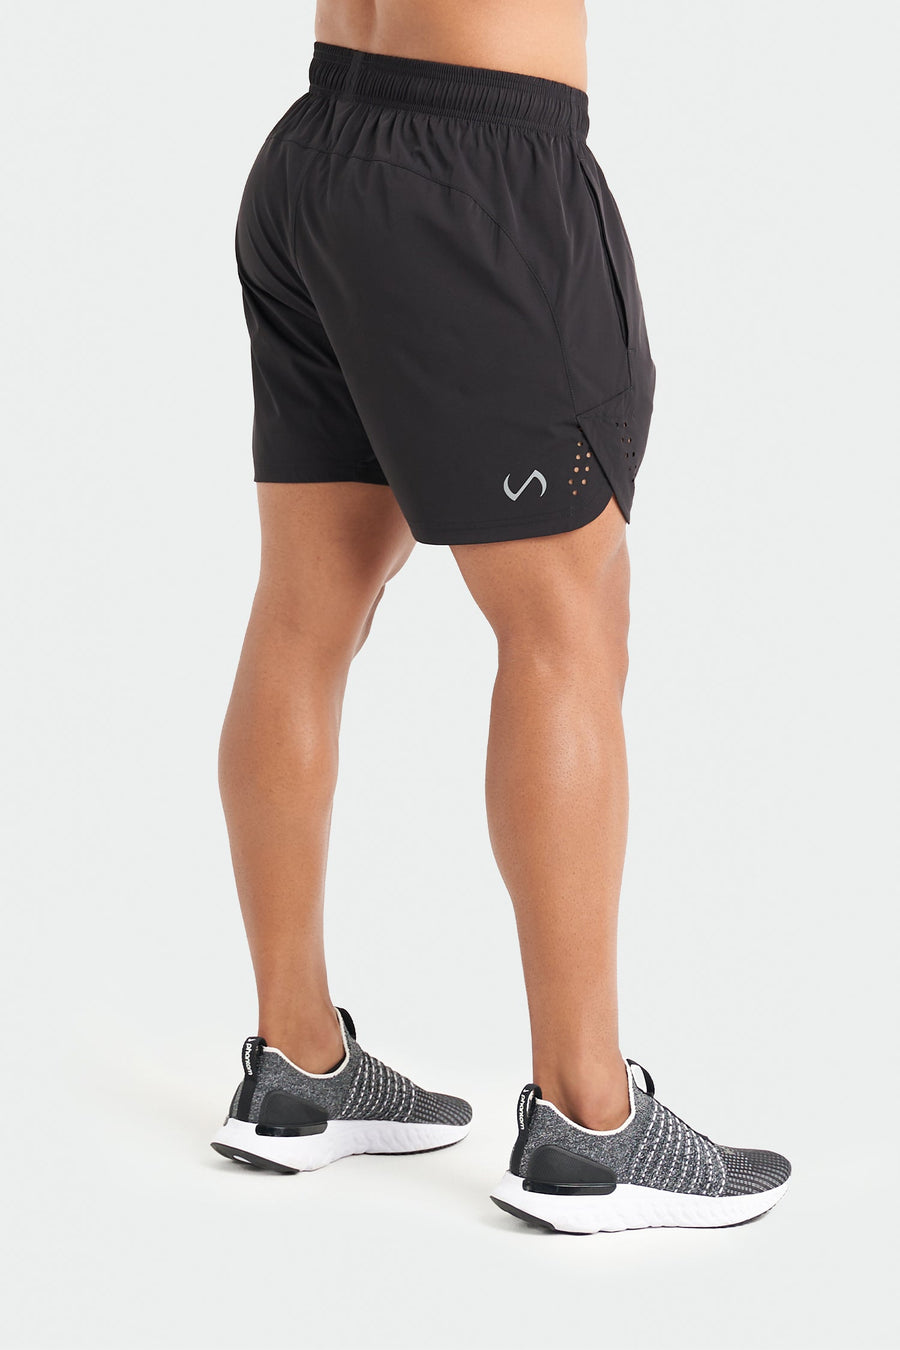 TLF Element 5” Shorts - Men’s 5 Inch inseam Shorts - Black - 5